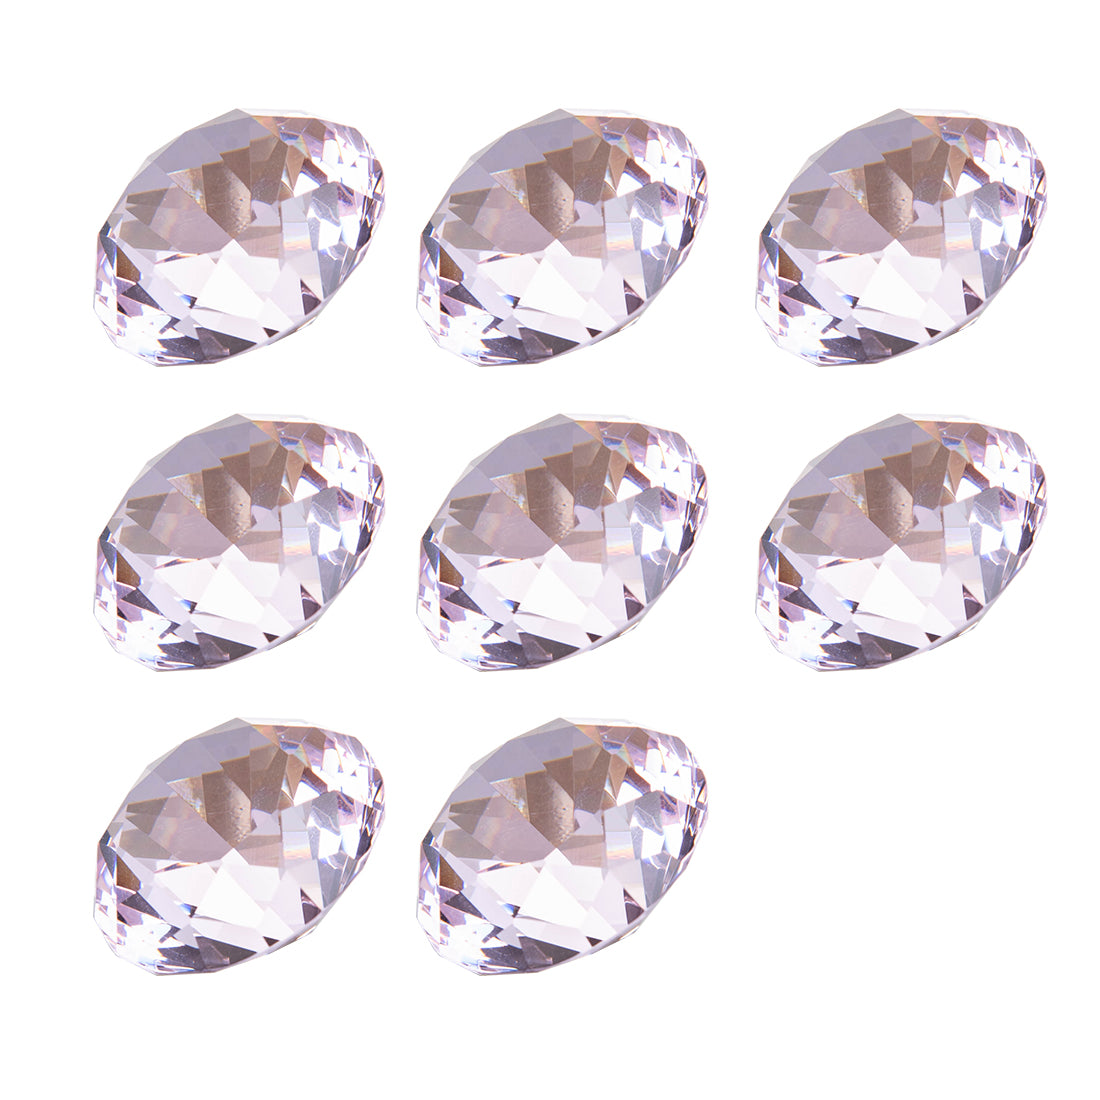 30mm Crystal Diamond Ornaments Centerpiece (8 Pieces/Set)